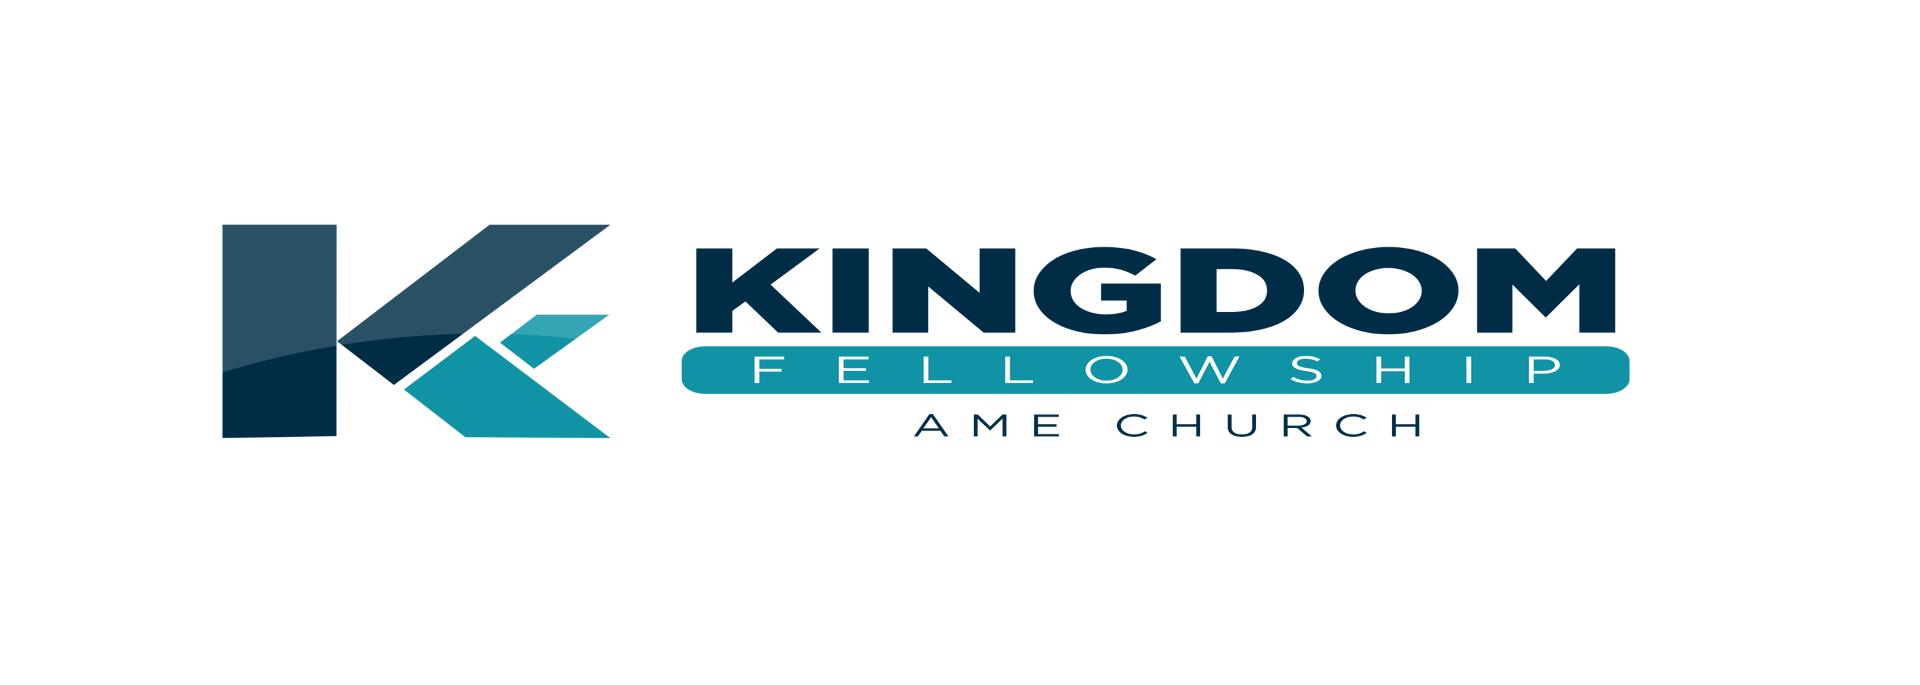 Kingdom Fellowship AME Church channel